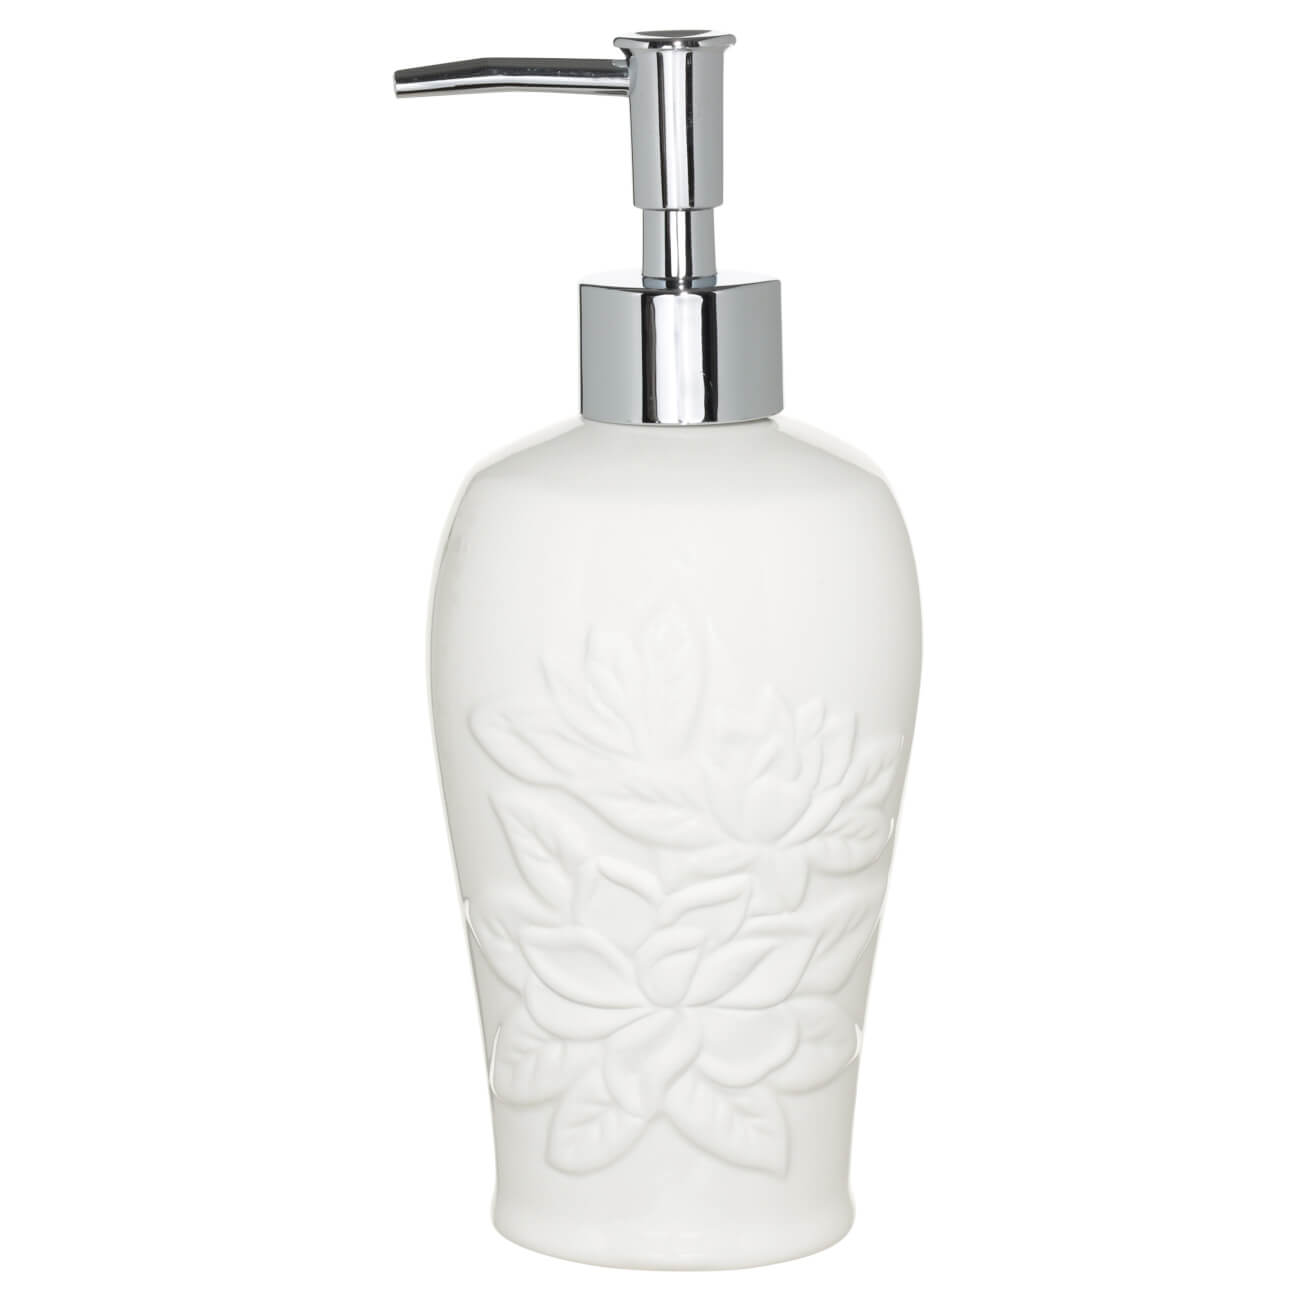 Диспенсер для жидкого мыла, 360 мл, керамика/пластик, белый, Shower Lotus настенный стеклянный дозатор для жидкого мыла диспенсер haiba